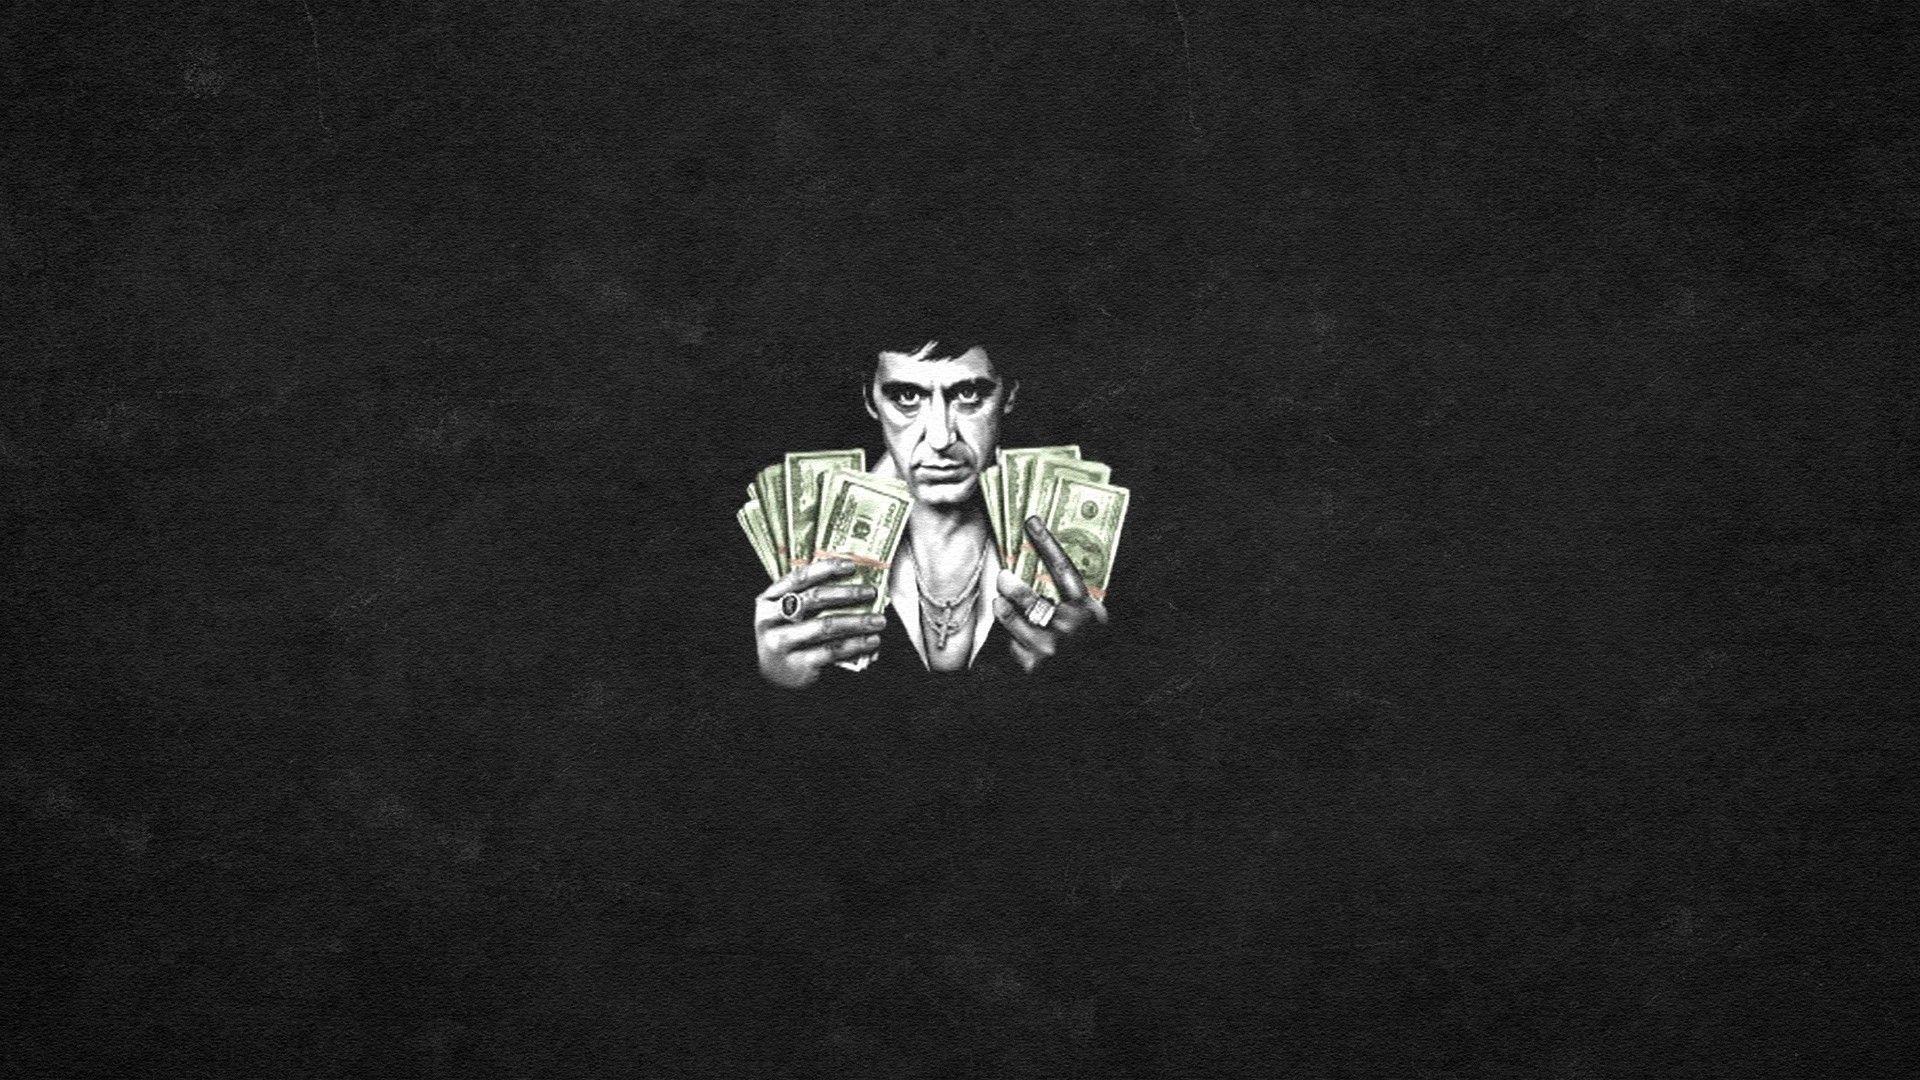 Wallpaper, drawing, illustration, black background, logo, Al Pacino